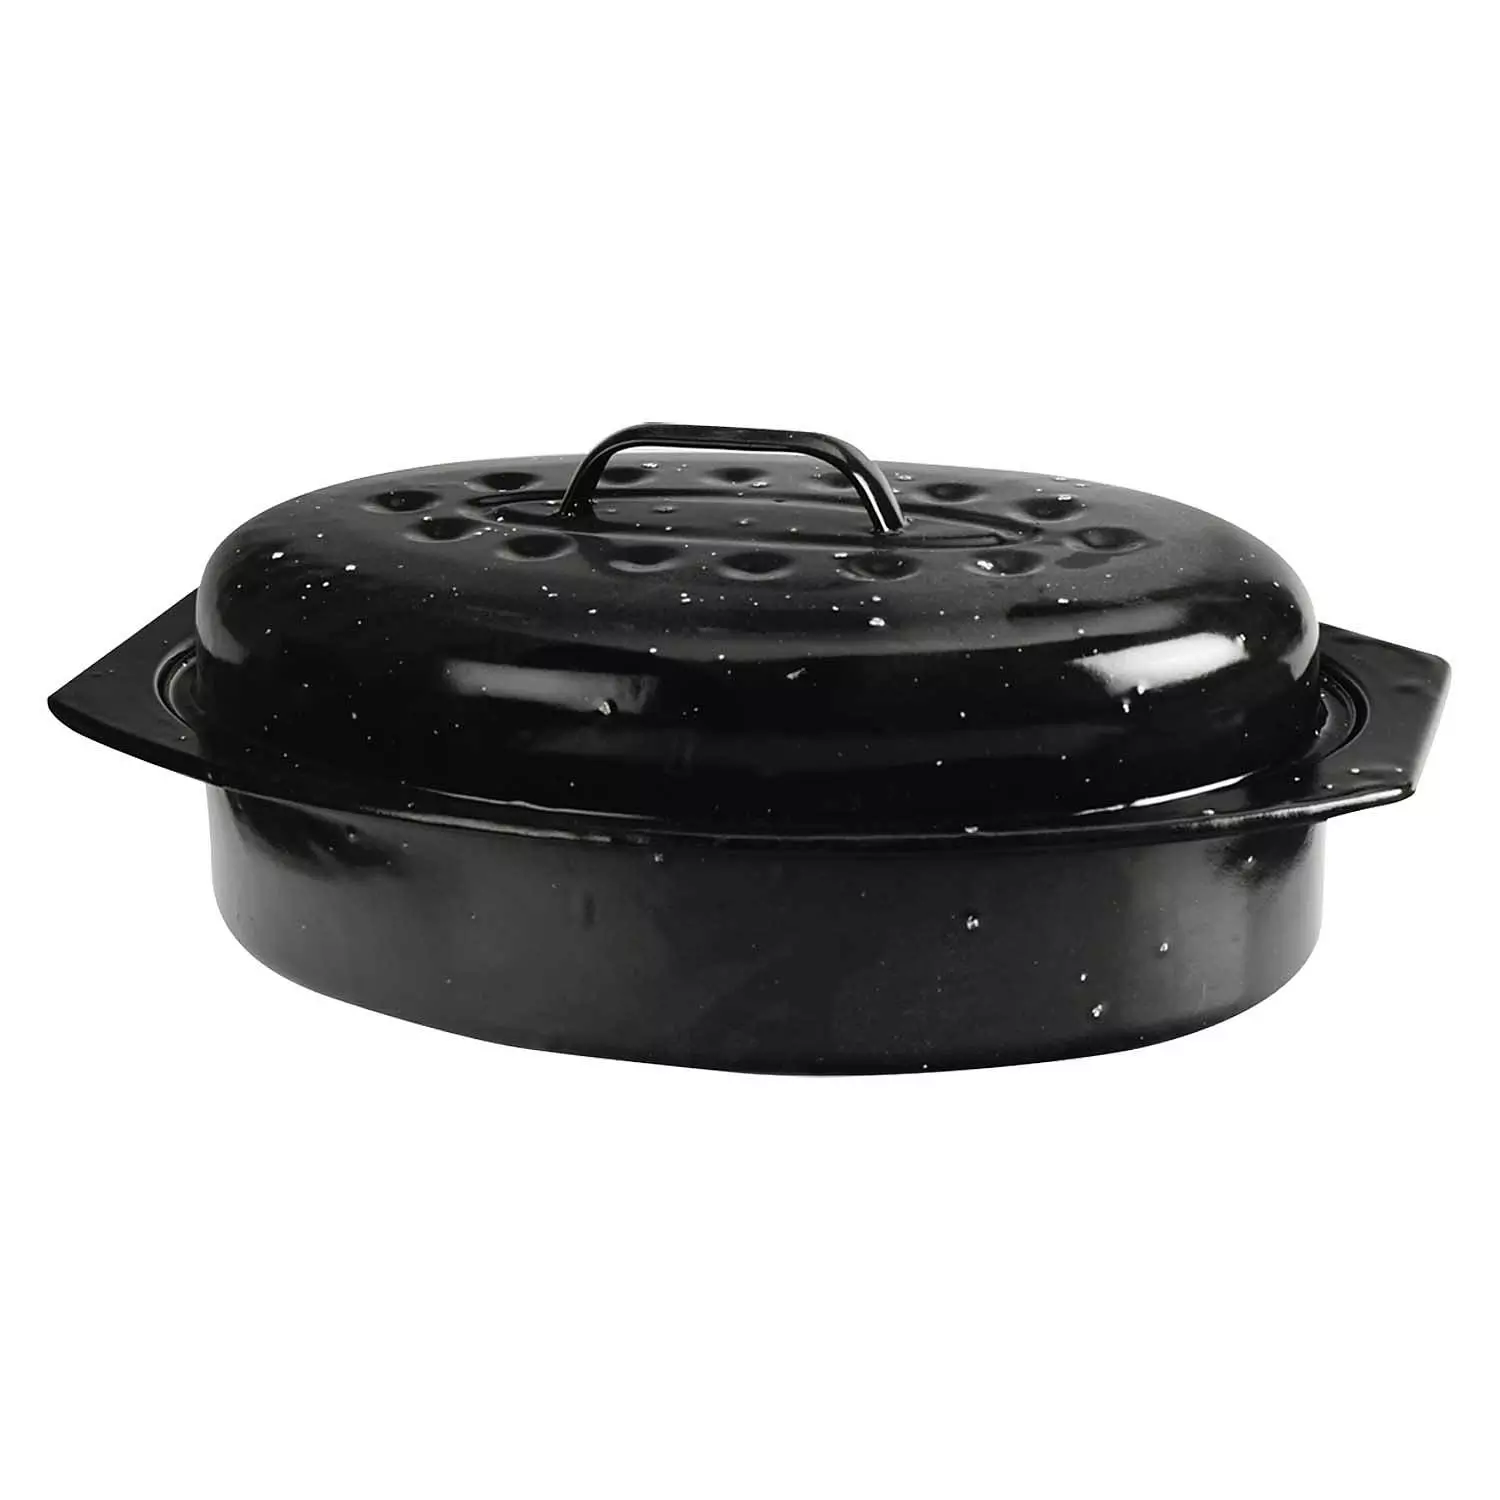 Black oval-shaped enamel roaster with lid, 19"